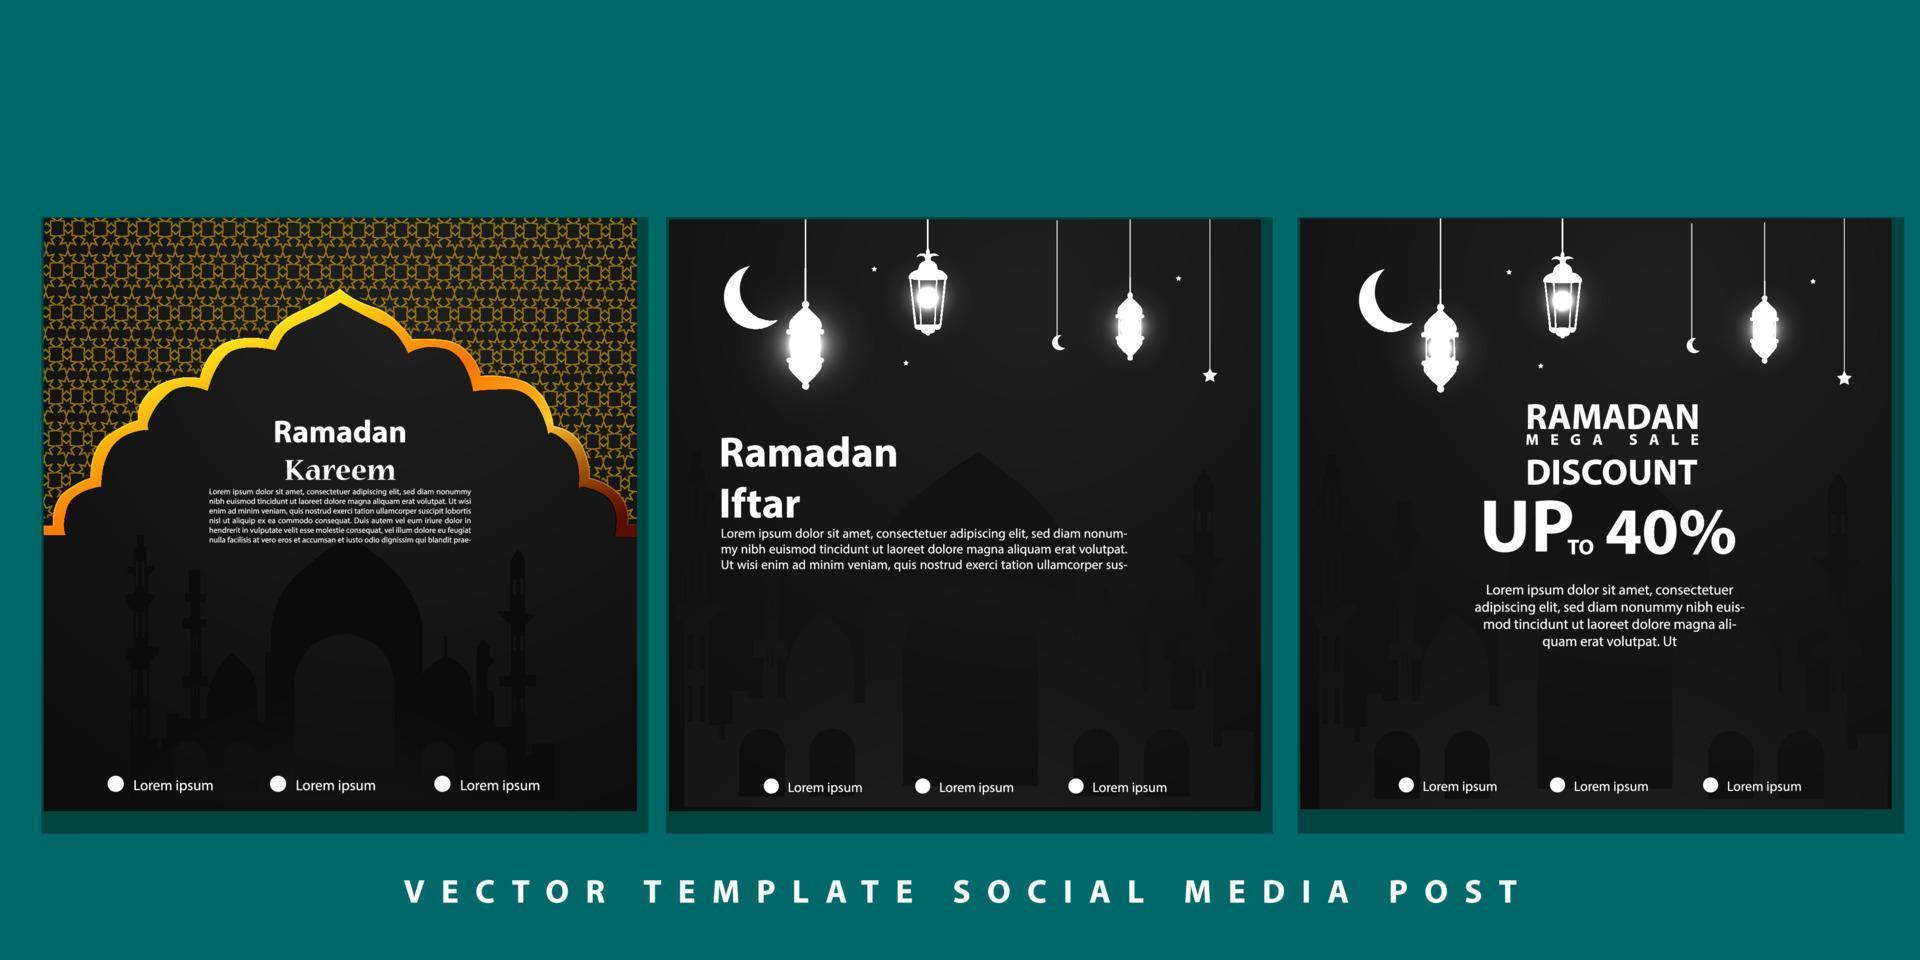 reeks van plein sociaal media post sjabloon mega uitverkoop Promotie met modern lantaarn goud ontwerp. iftar gemeen is Ramadan. sociaal media sjabloon met Islamitisch achtergrond ontwerp vector